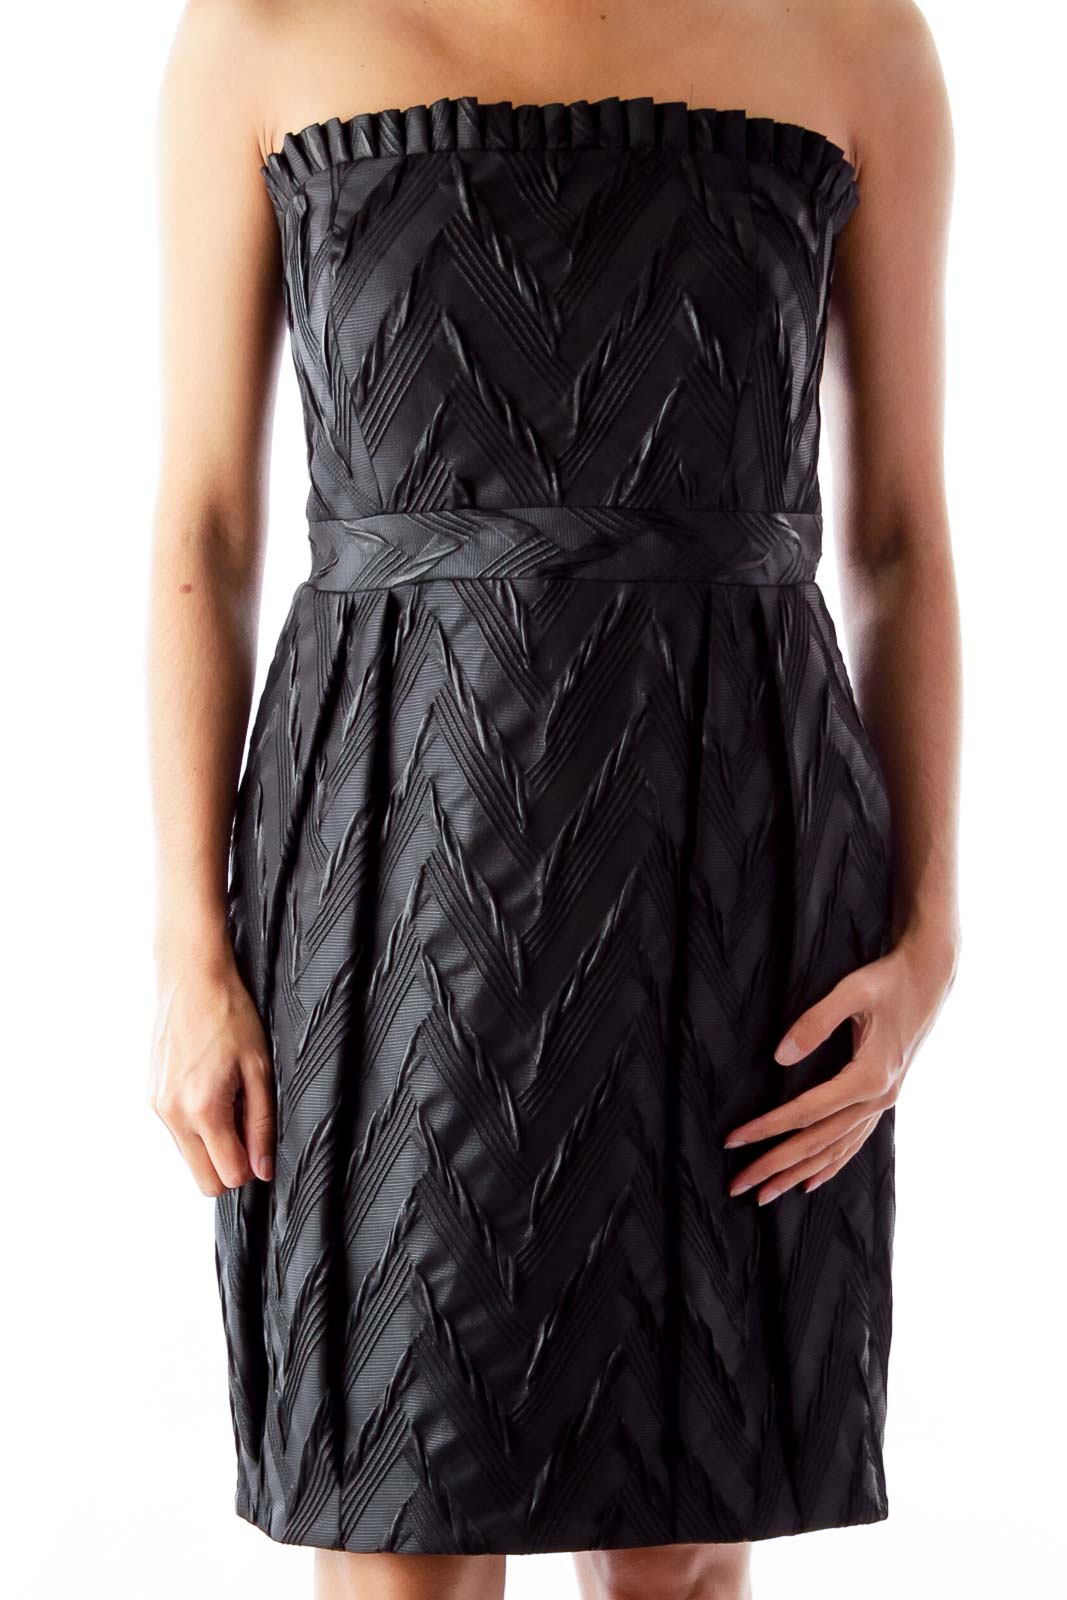 Black Brocade Strapless Dress Front